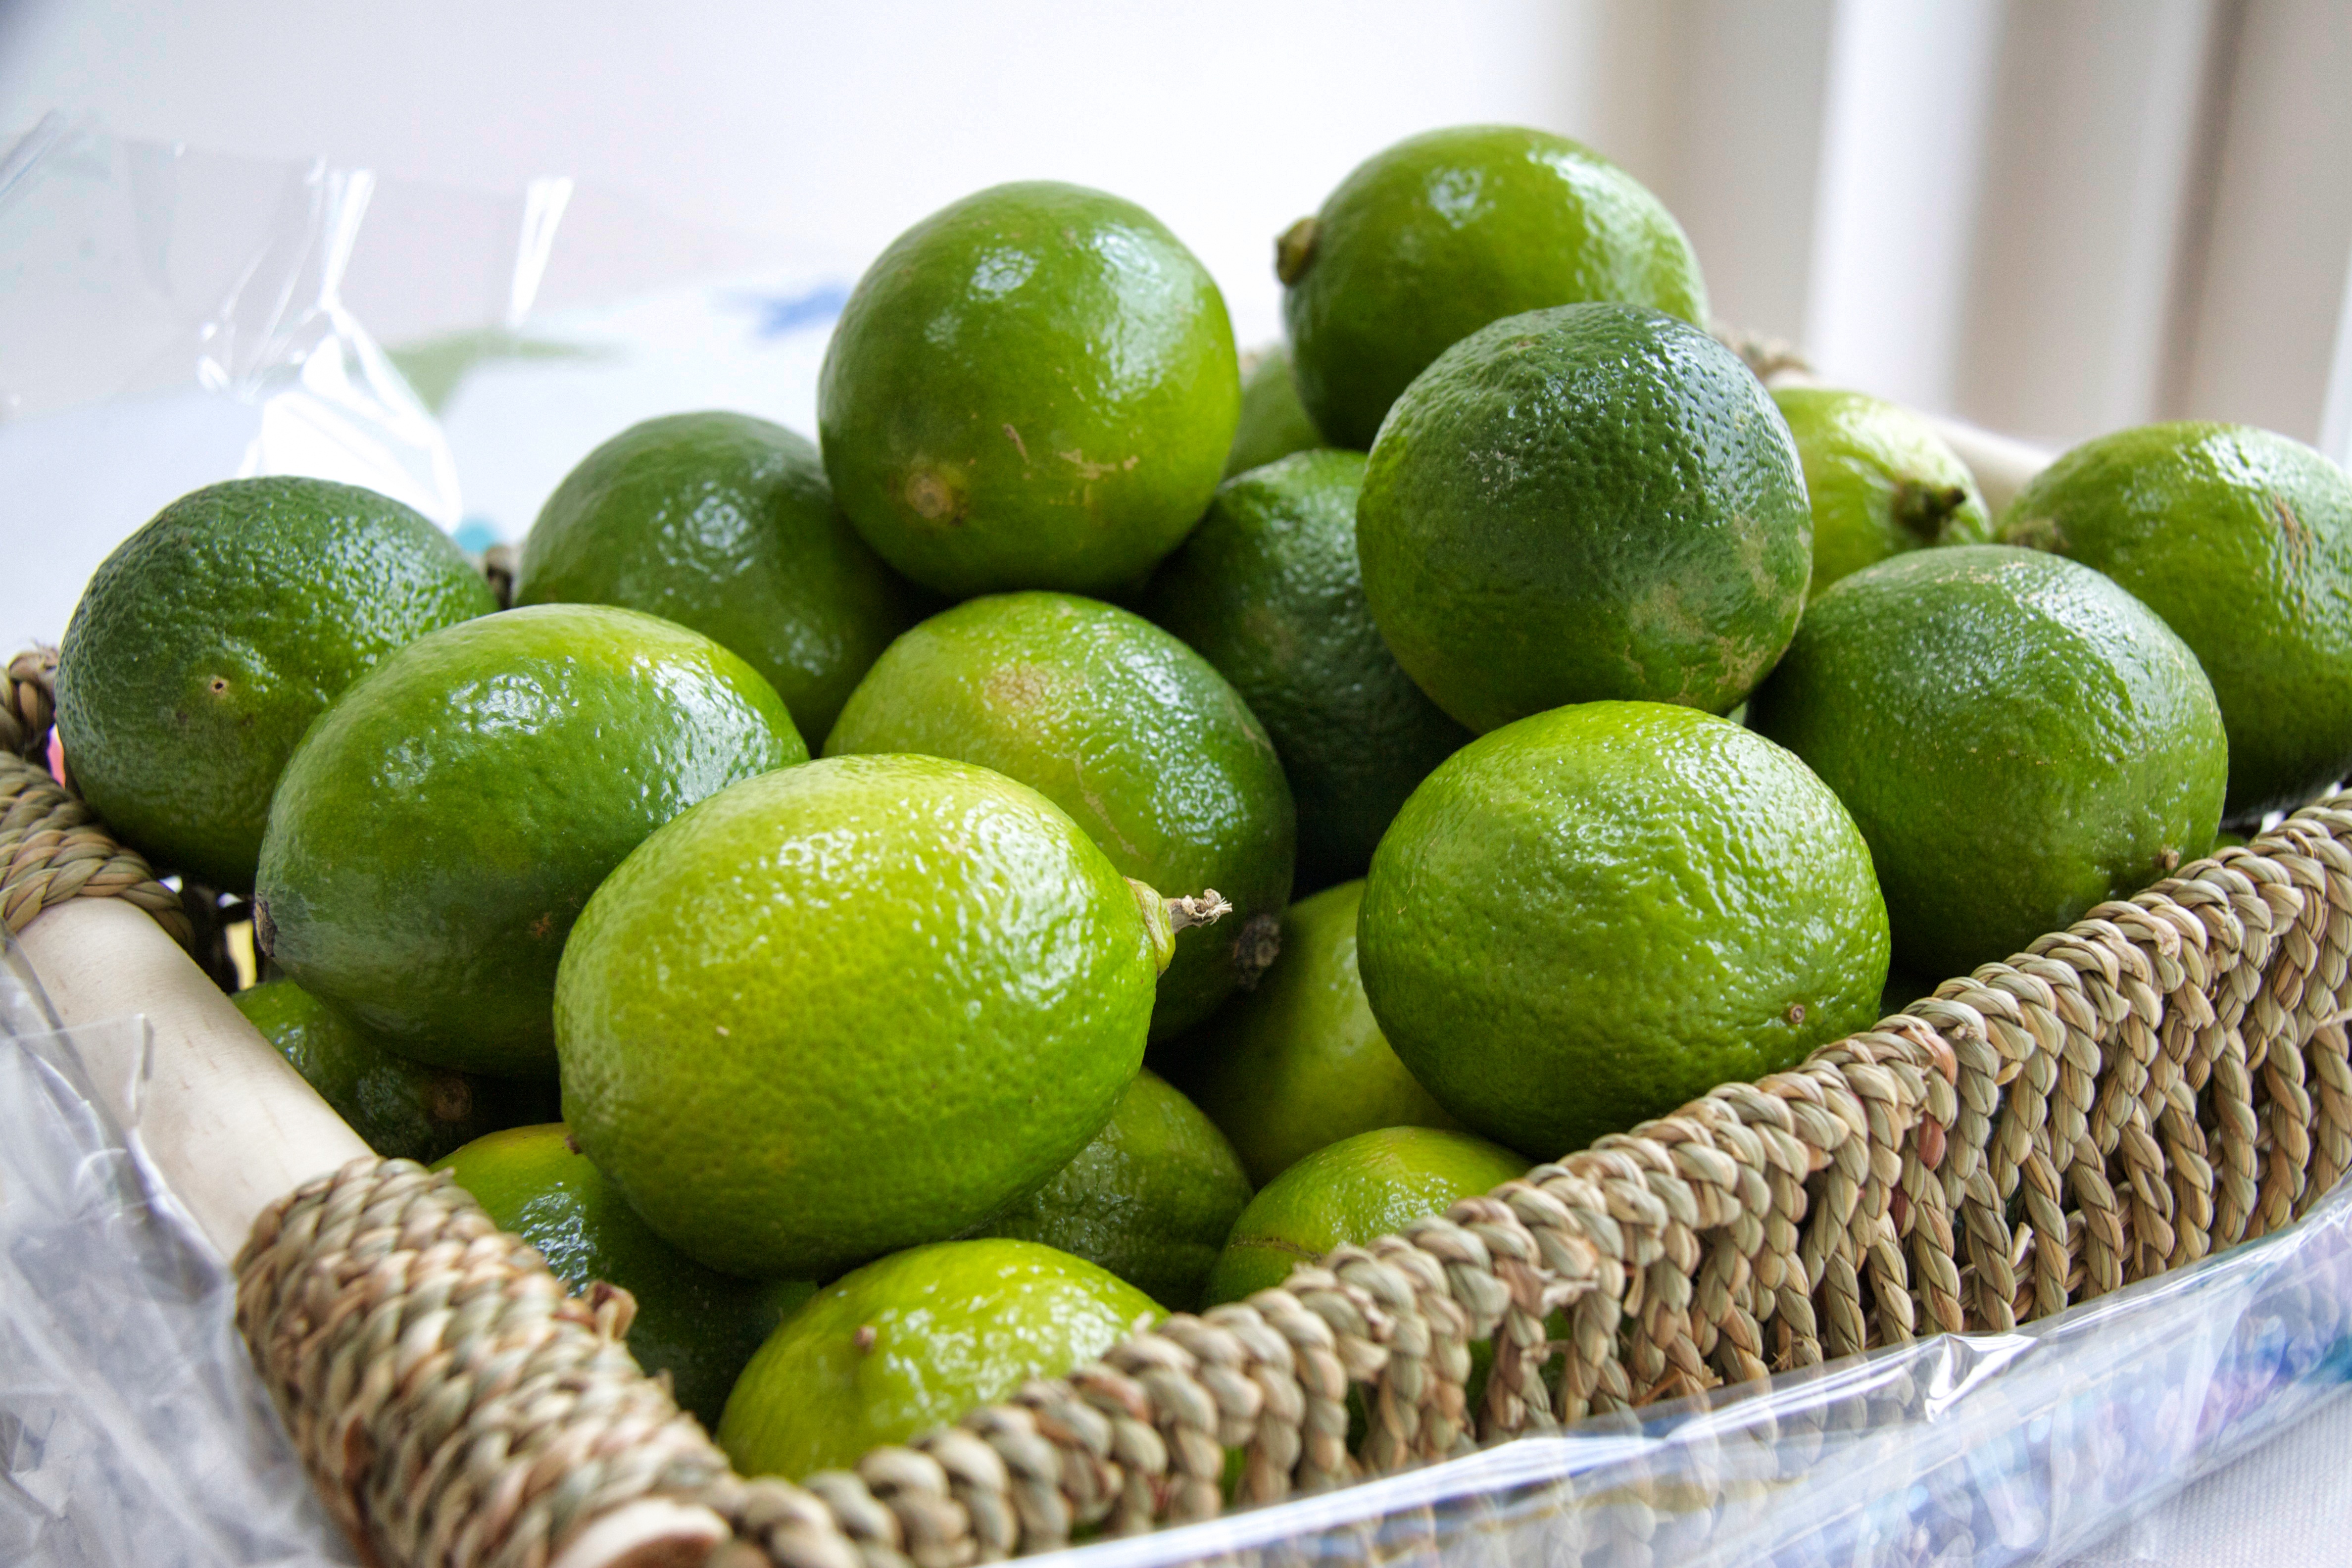 A basketful of Brazilian Limes